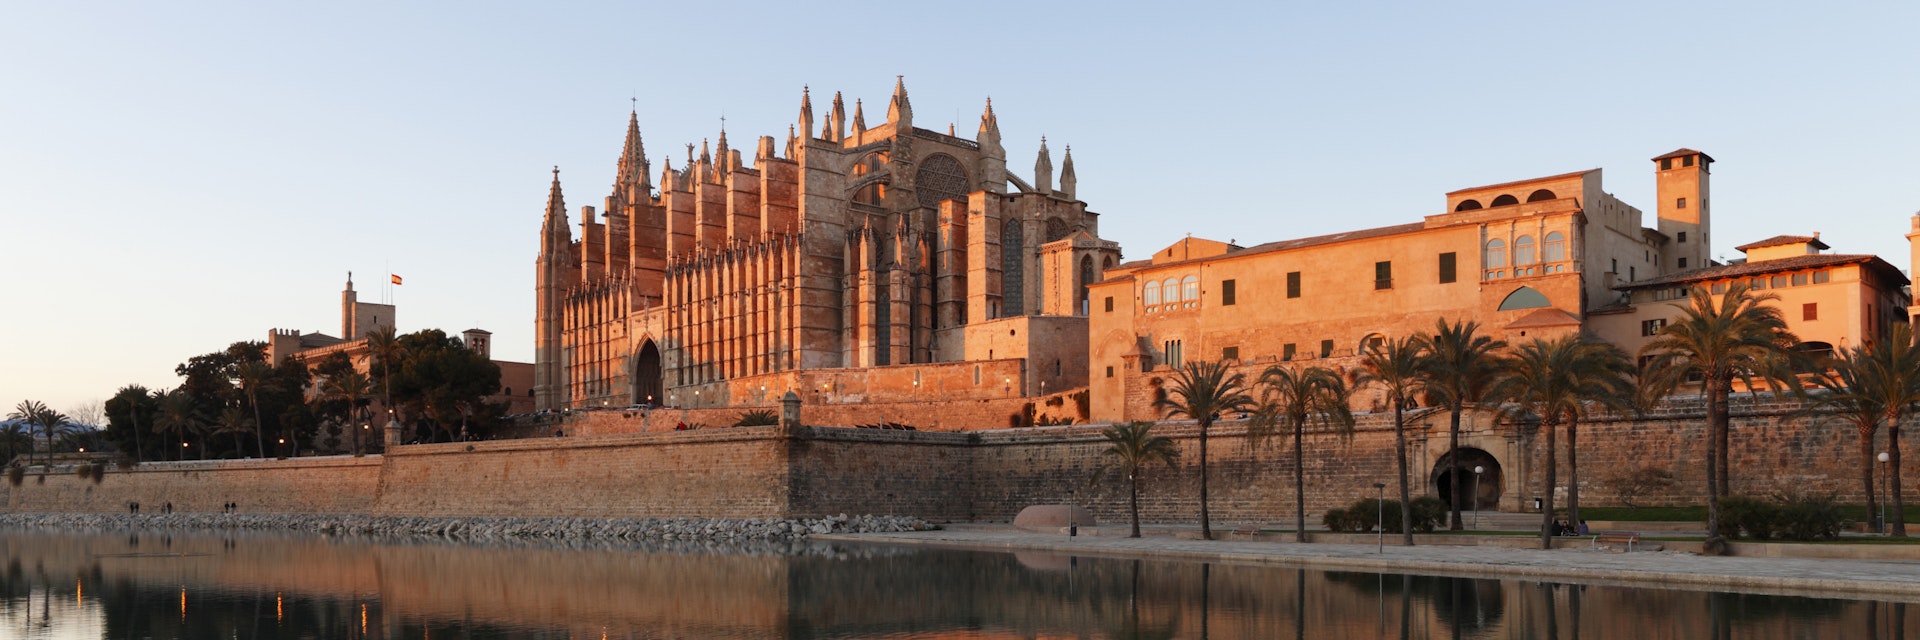 Spain, Balearic Islands, Majorca, Palma de Mallorca, Parc de Mar, Almudaina Palace, Cathedral La Seu